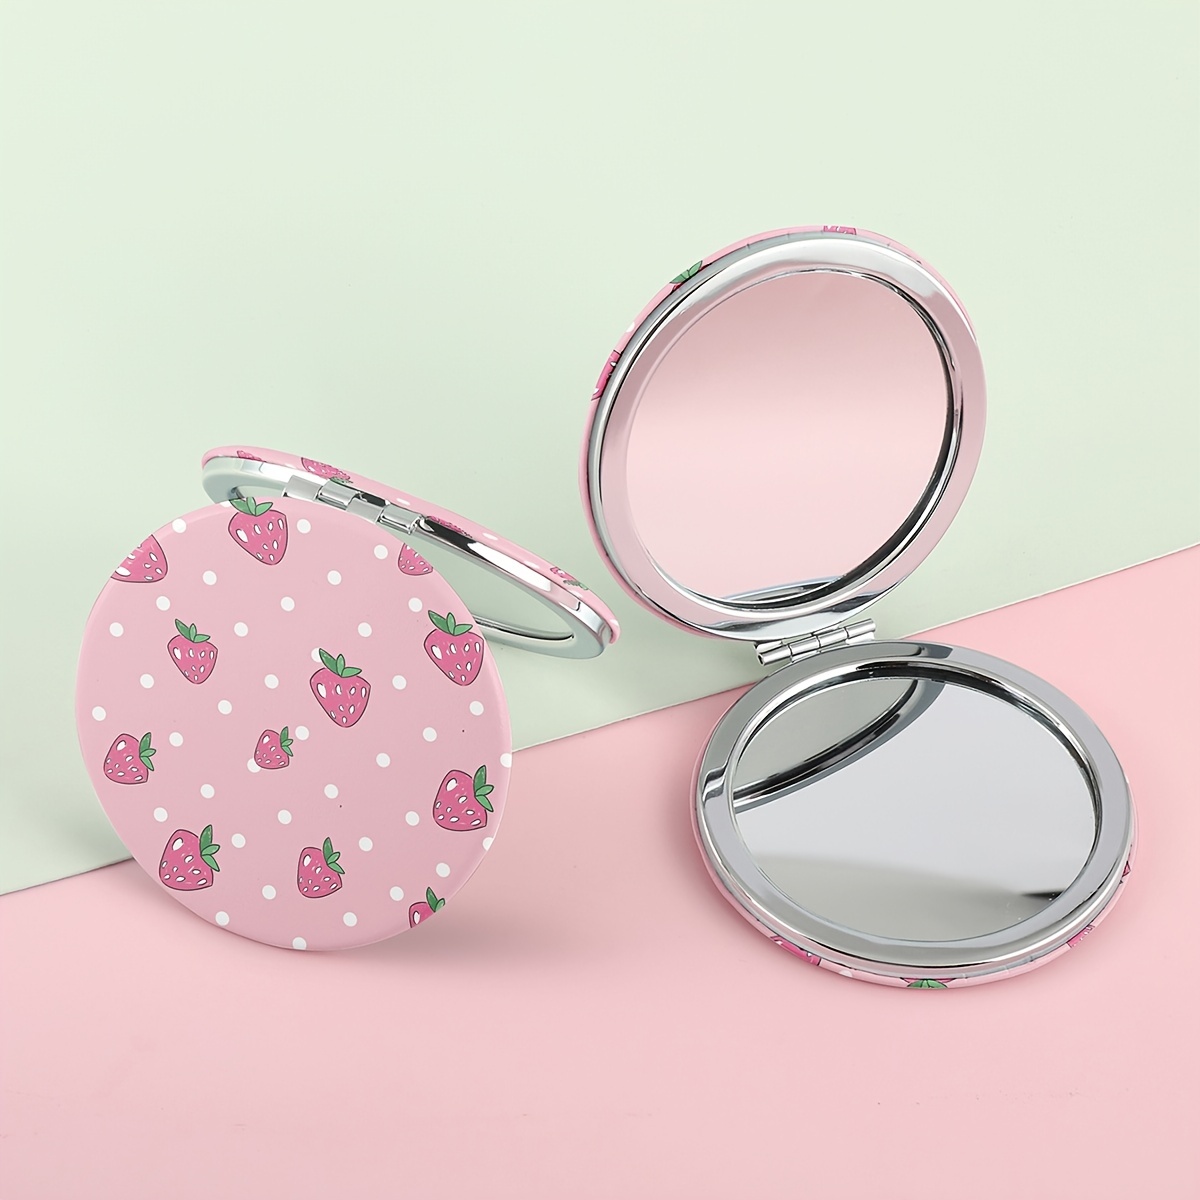 Designer Compact Mirror - Glitter Heart Print